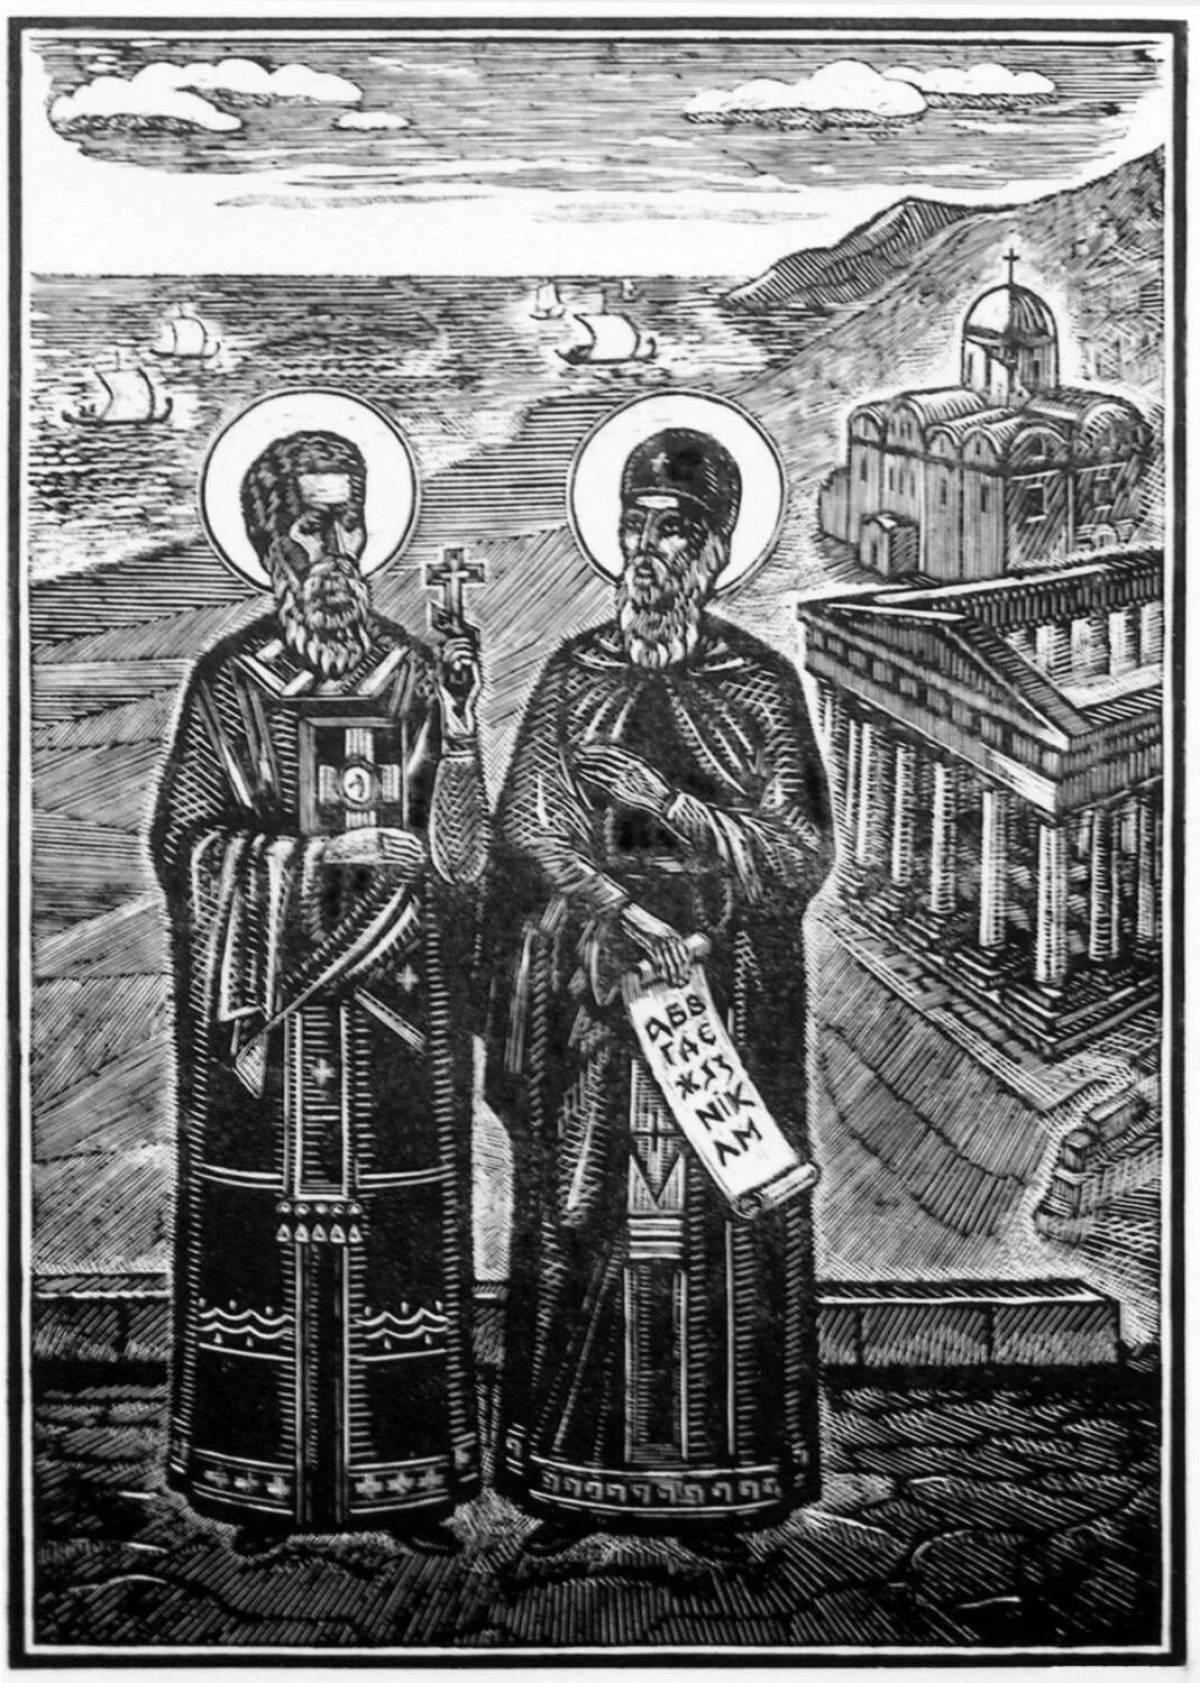 Cyril and Methodius beckoning coloring book